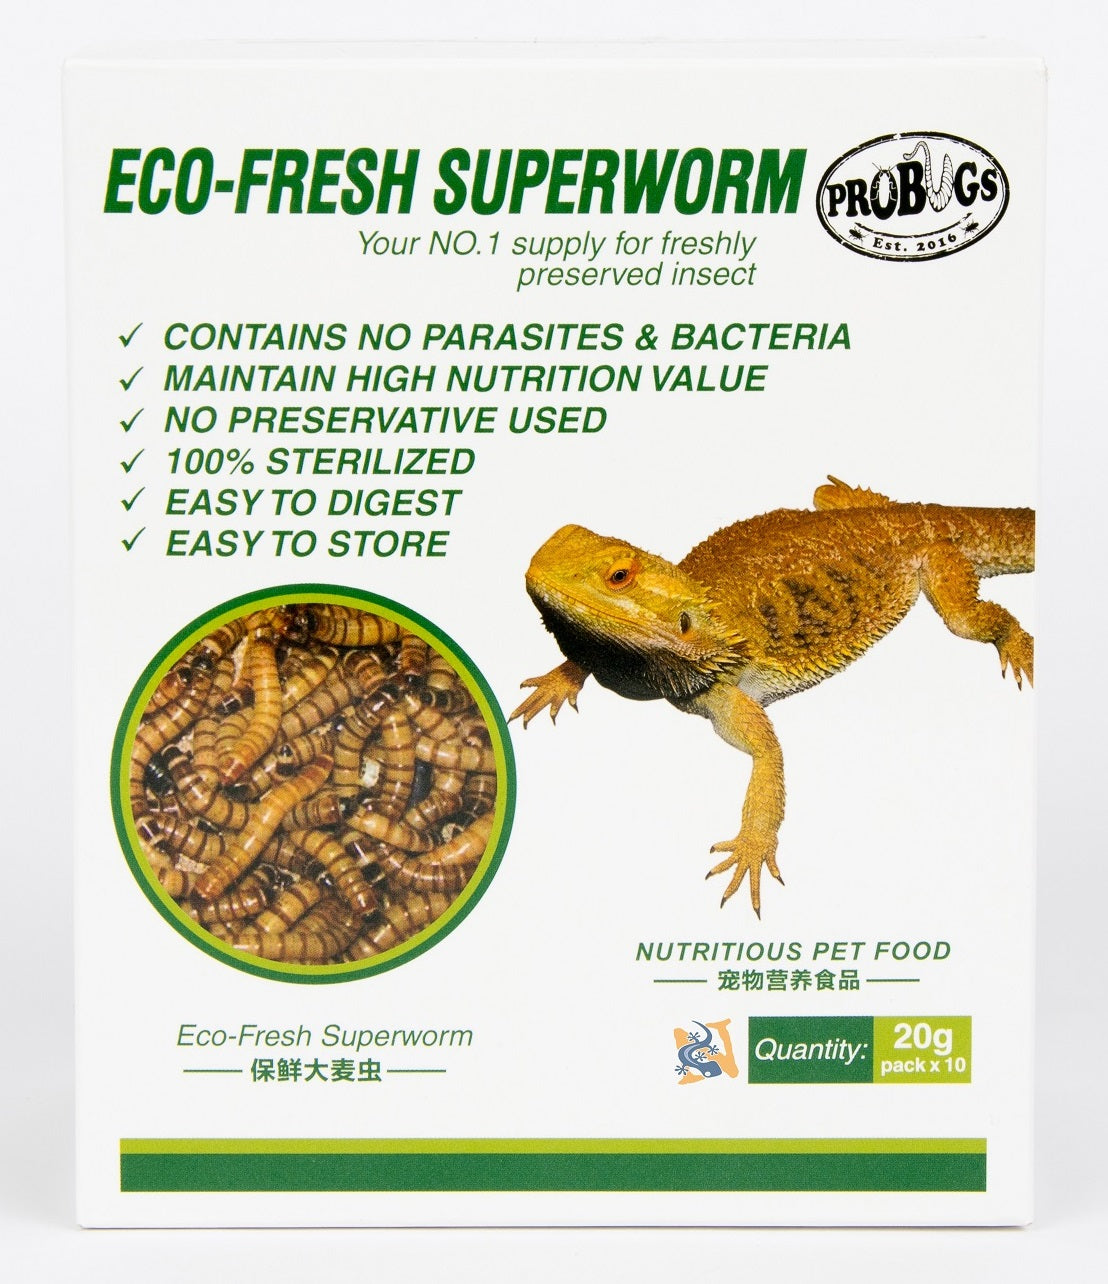 Pro Bugs Eco-Fresh Superworms